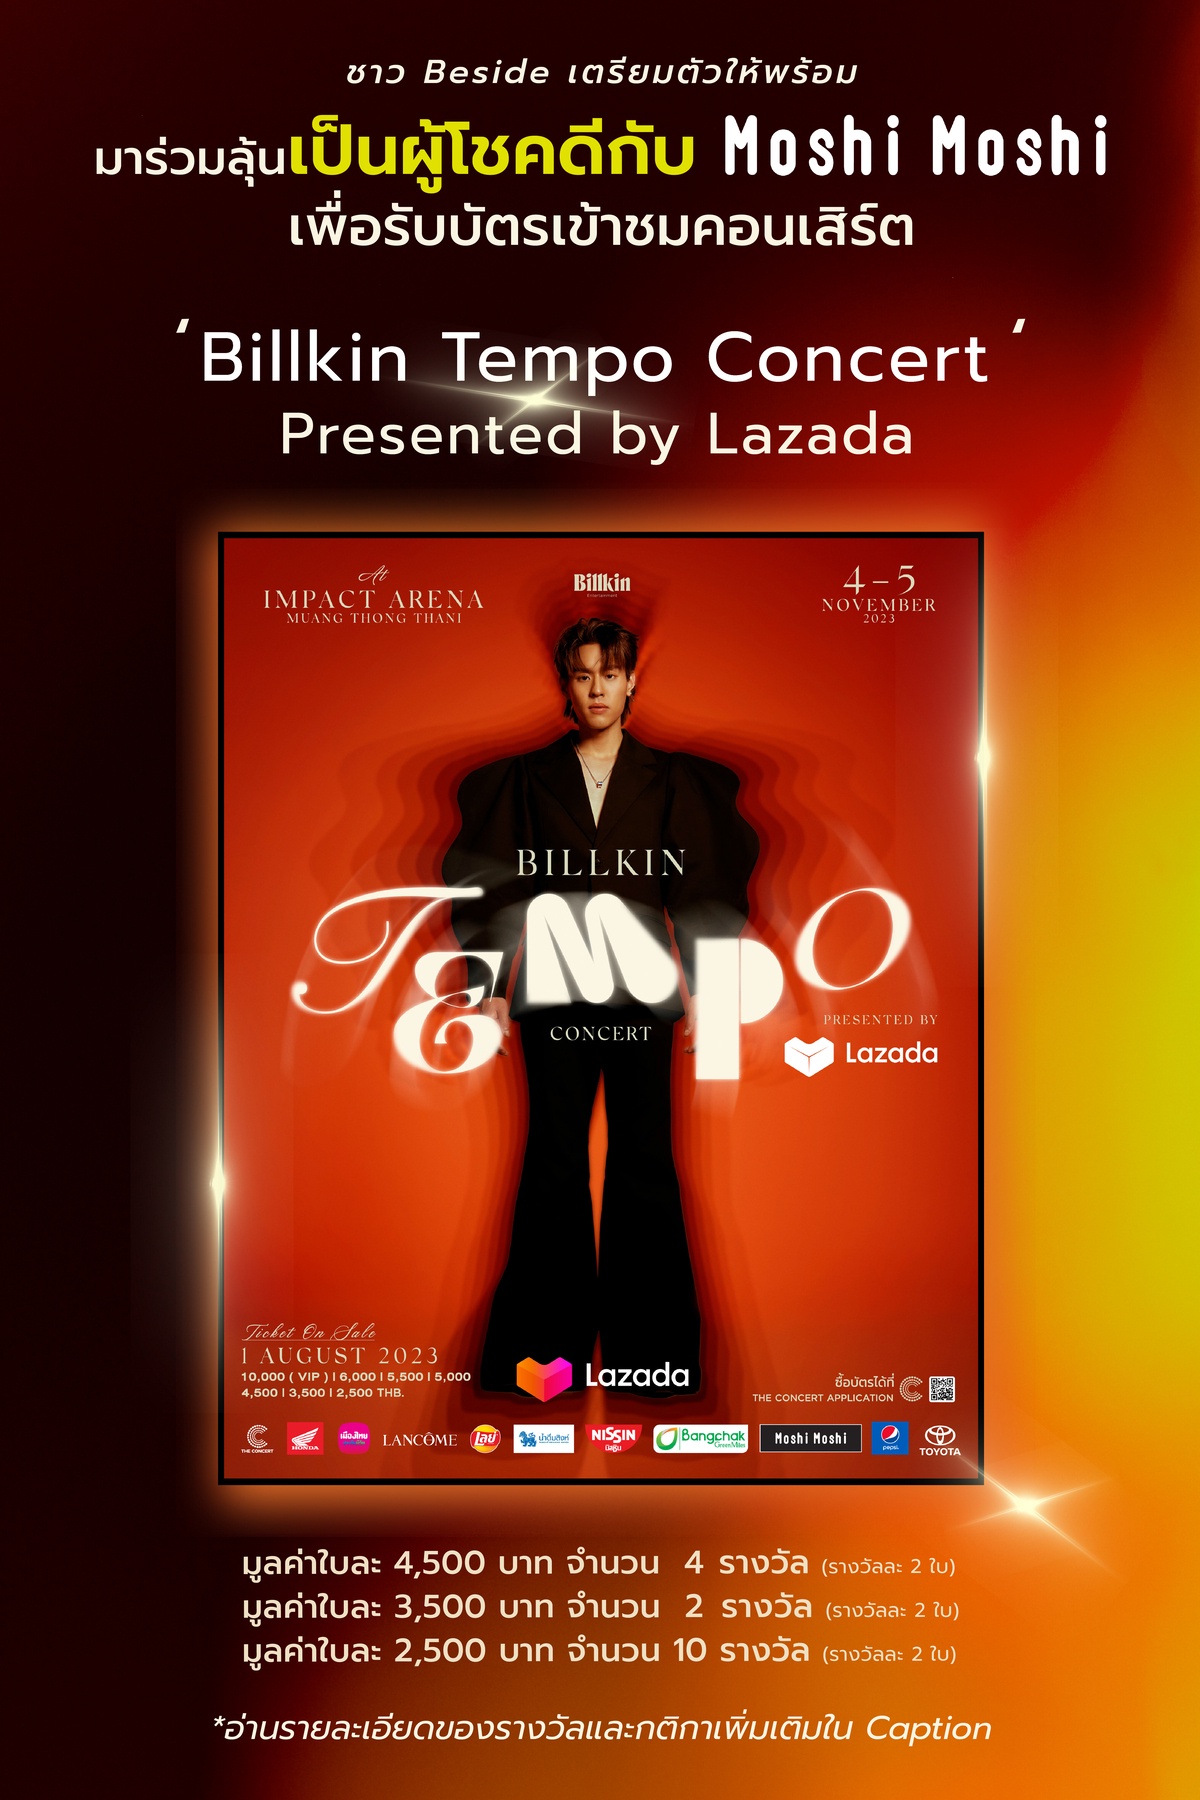 MOSHI สร้างปรากฏการณ์ความสนุกอีกครั้ง จัดกิจกรรมพิเศษ ให้ลูกค้าได้ลุ้นเป็นผู้โชคดีรับบัตรคอนเสิร์ต 'Billkin Tempo Concert Presented by